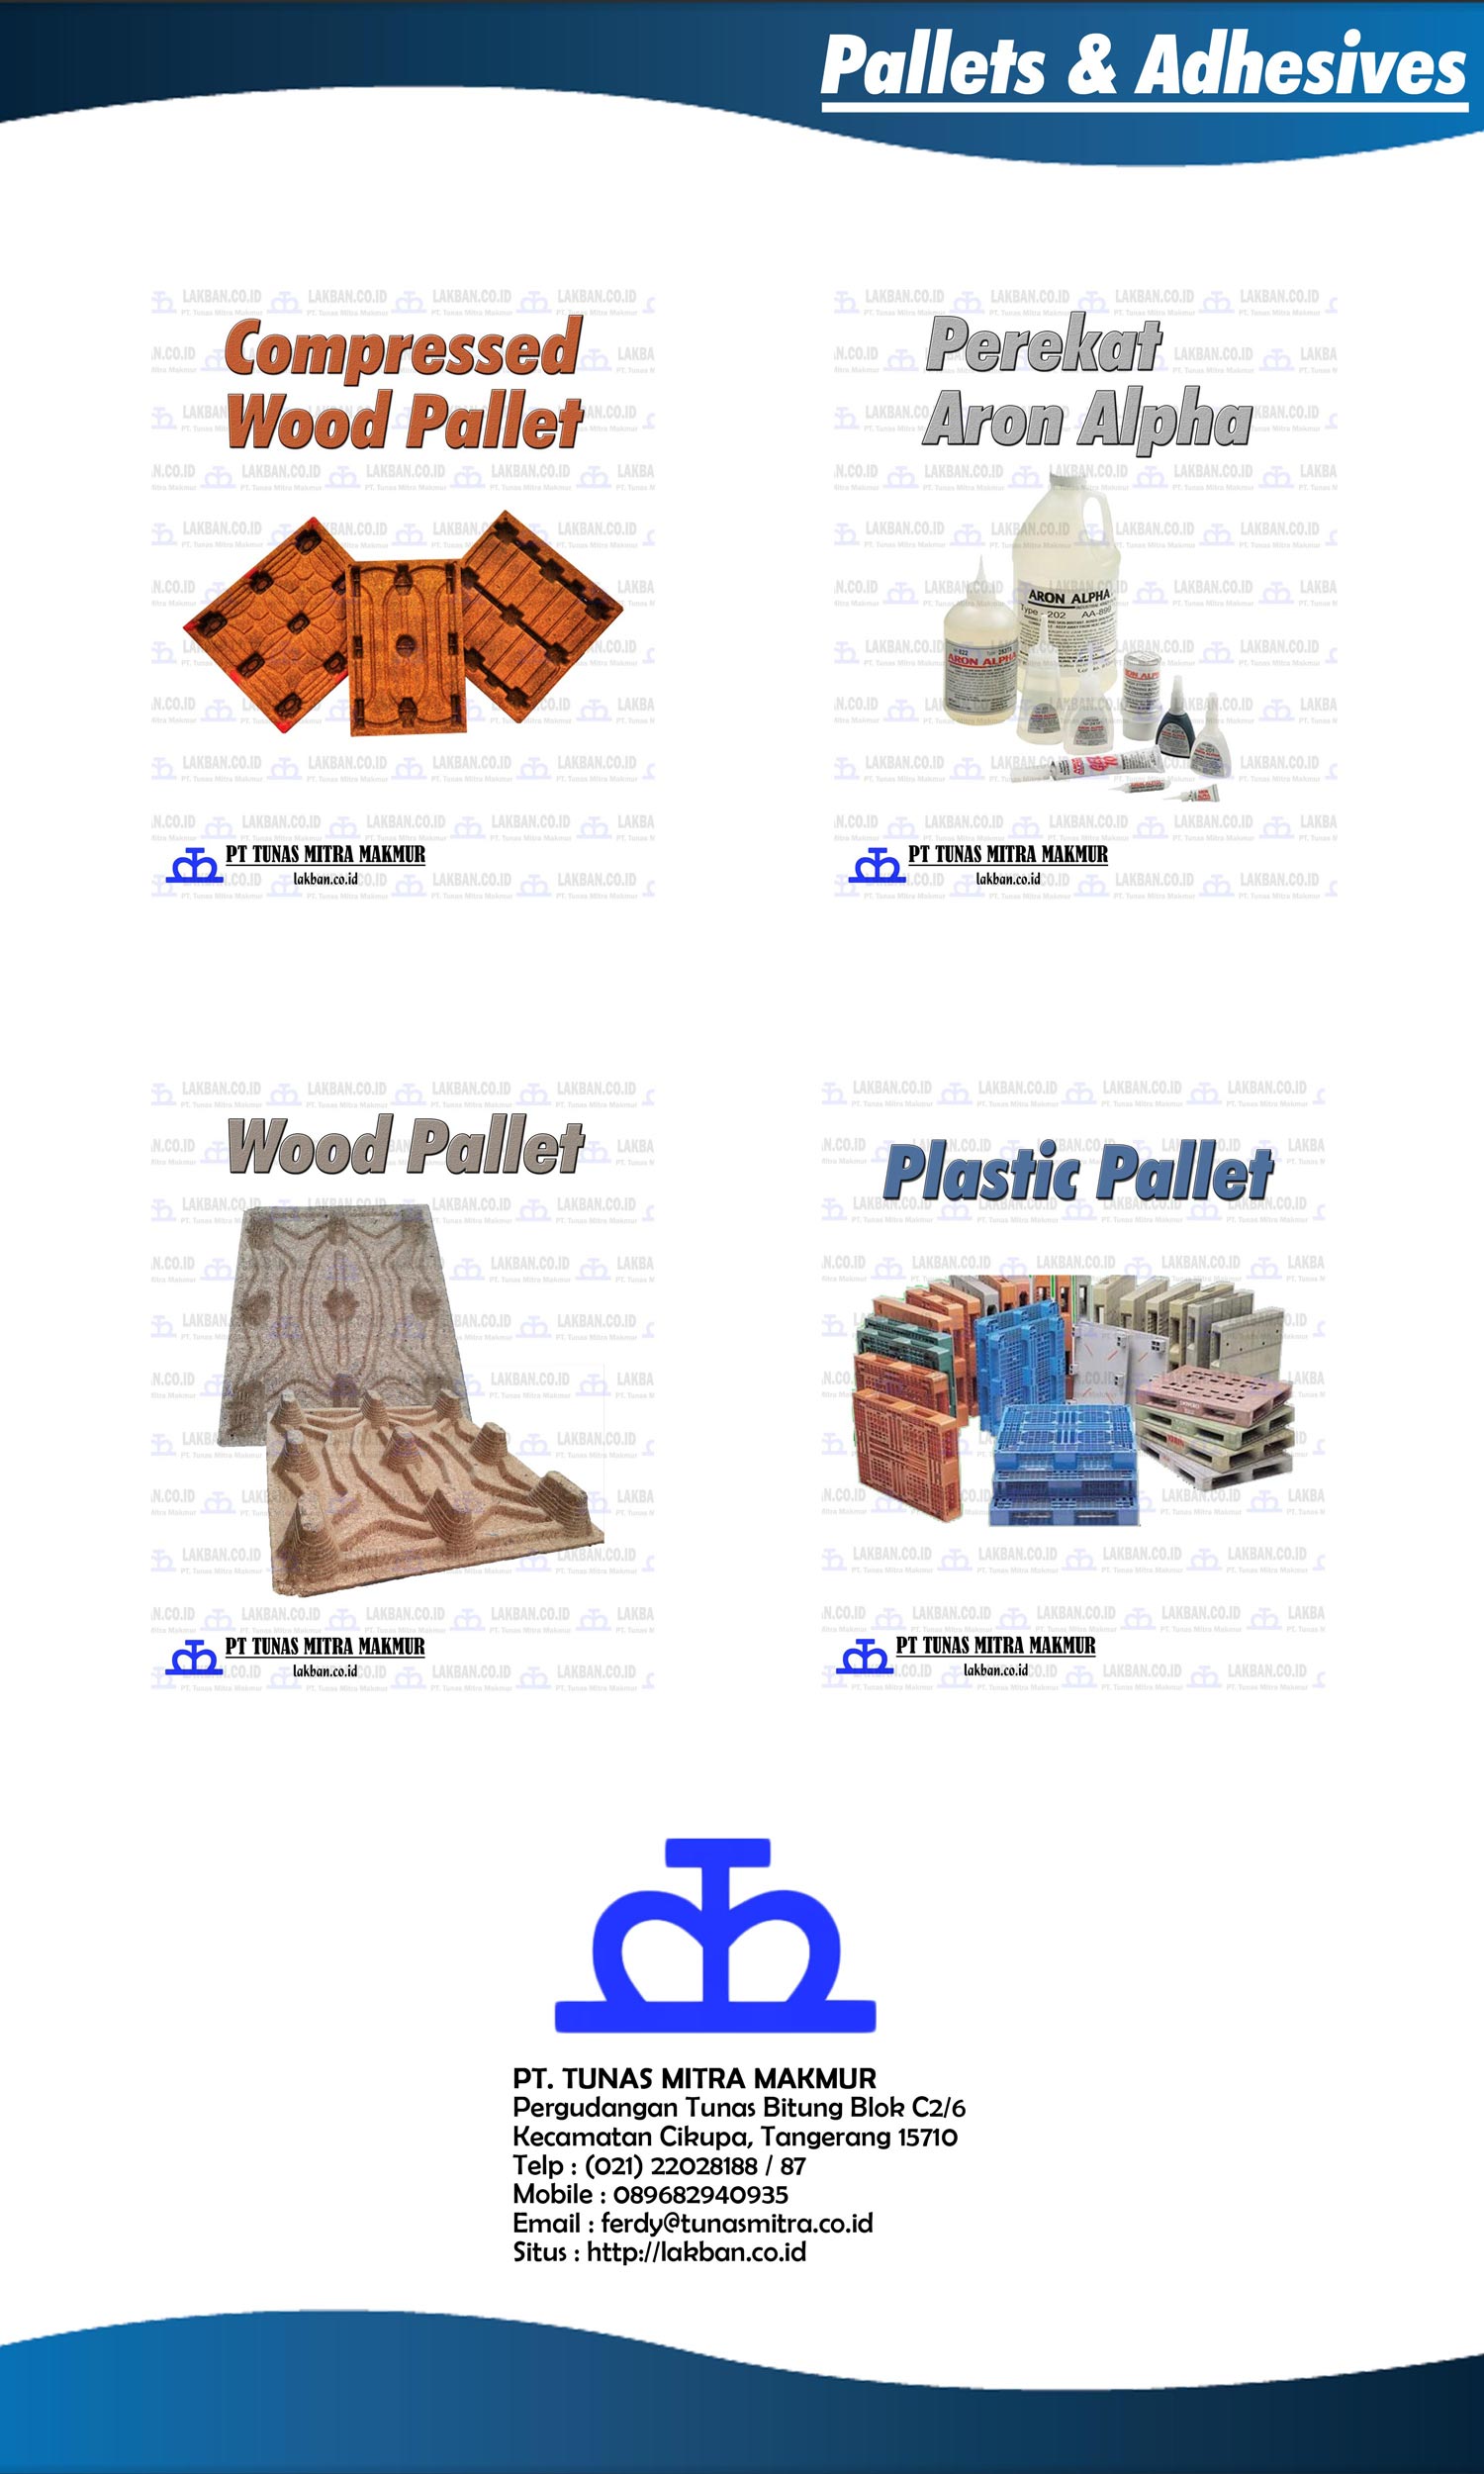 Katalog Produk Pallets & Adhesives dari PT. Tunas Mitra Makmur